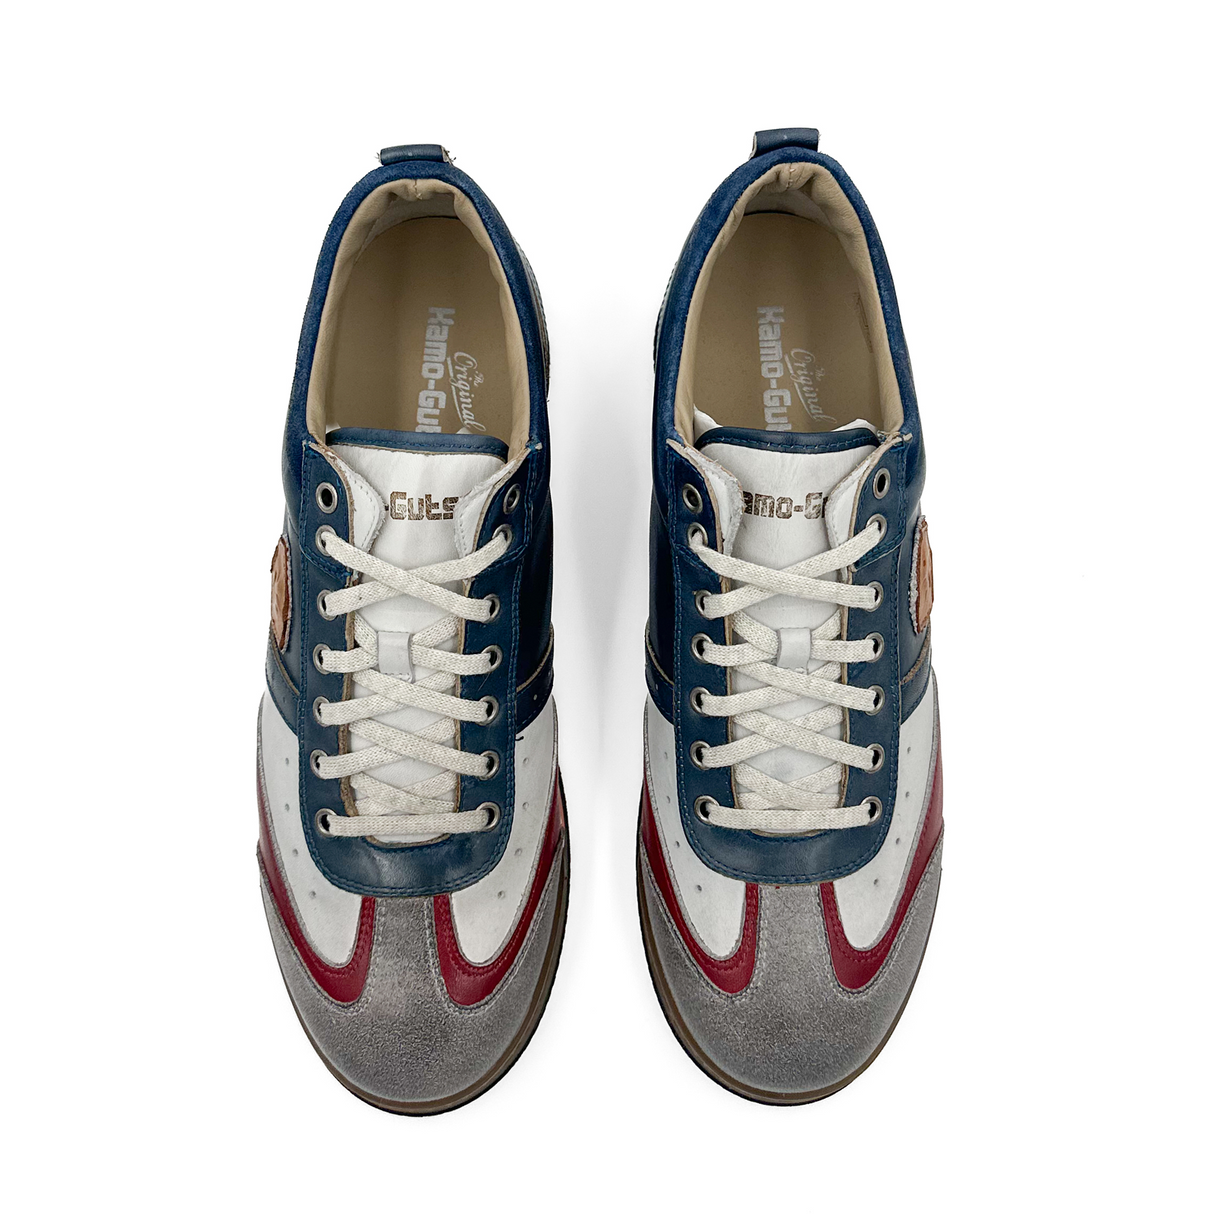 Kamo-Gutsu SCUDO 005 Sneaker (Men) - Navy Combi Athletic - Casual - Lace Up - The Heel Shoe Fitters